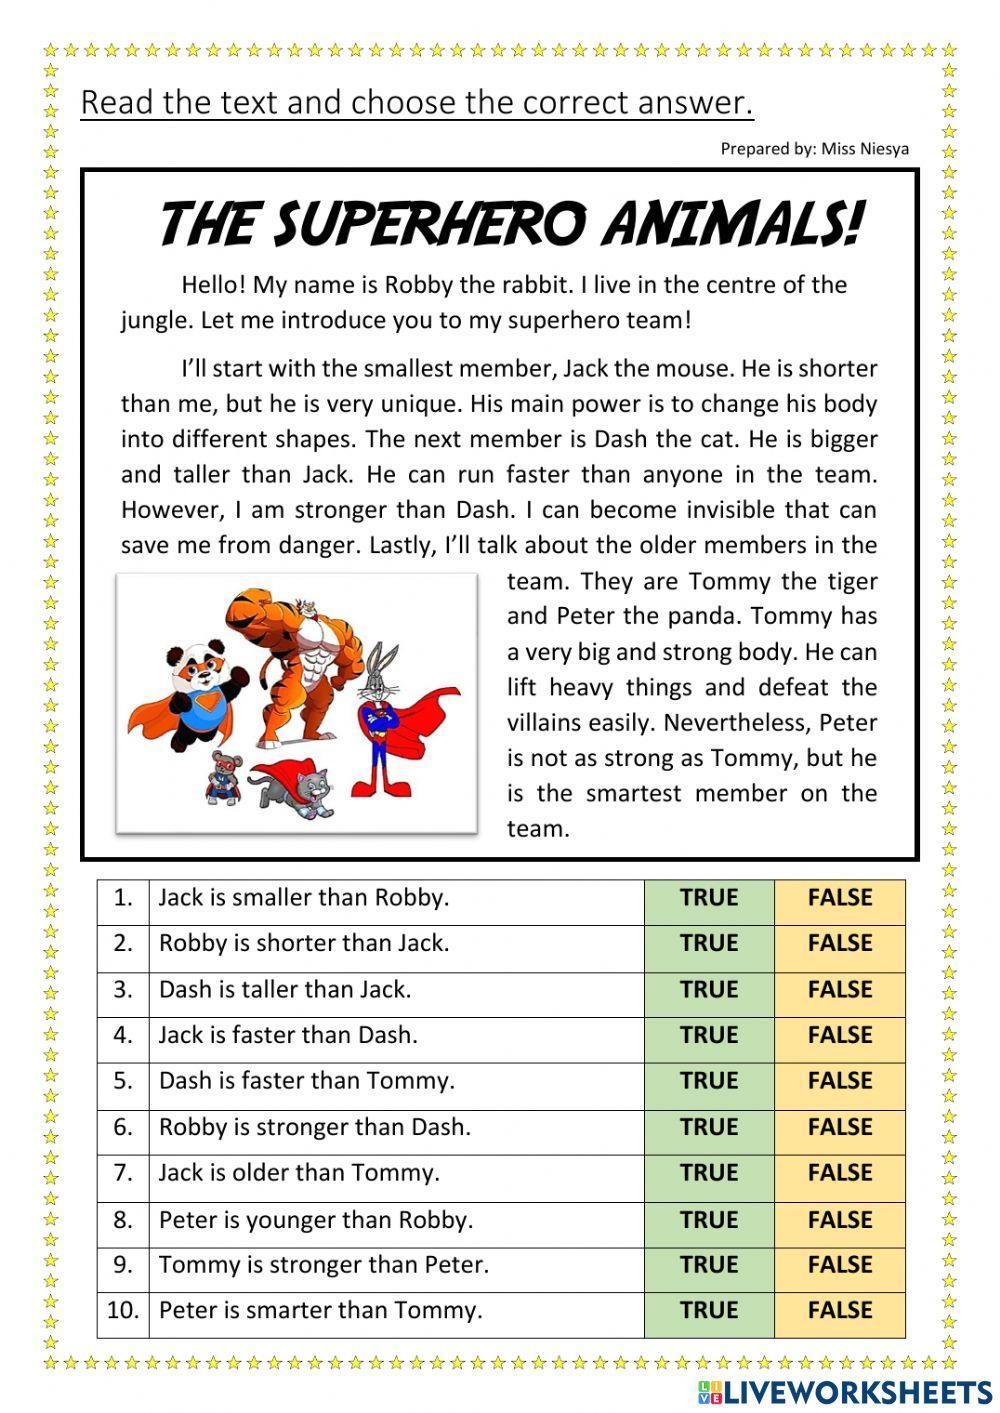 The superhero animals !